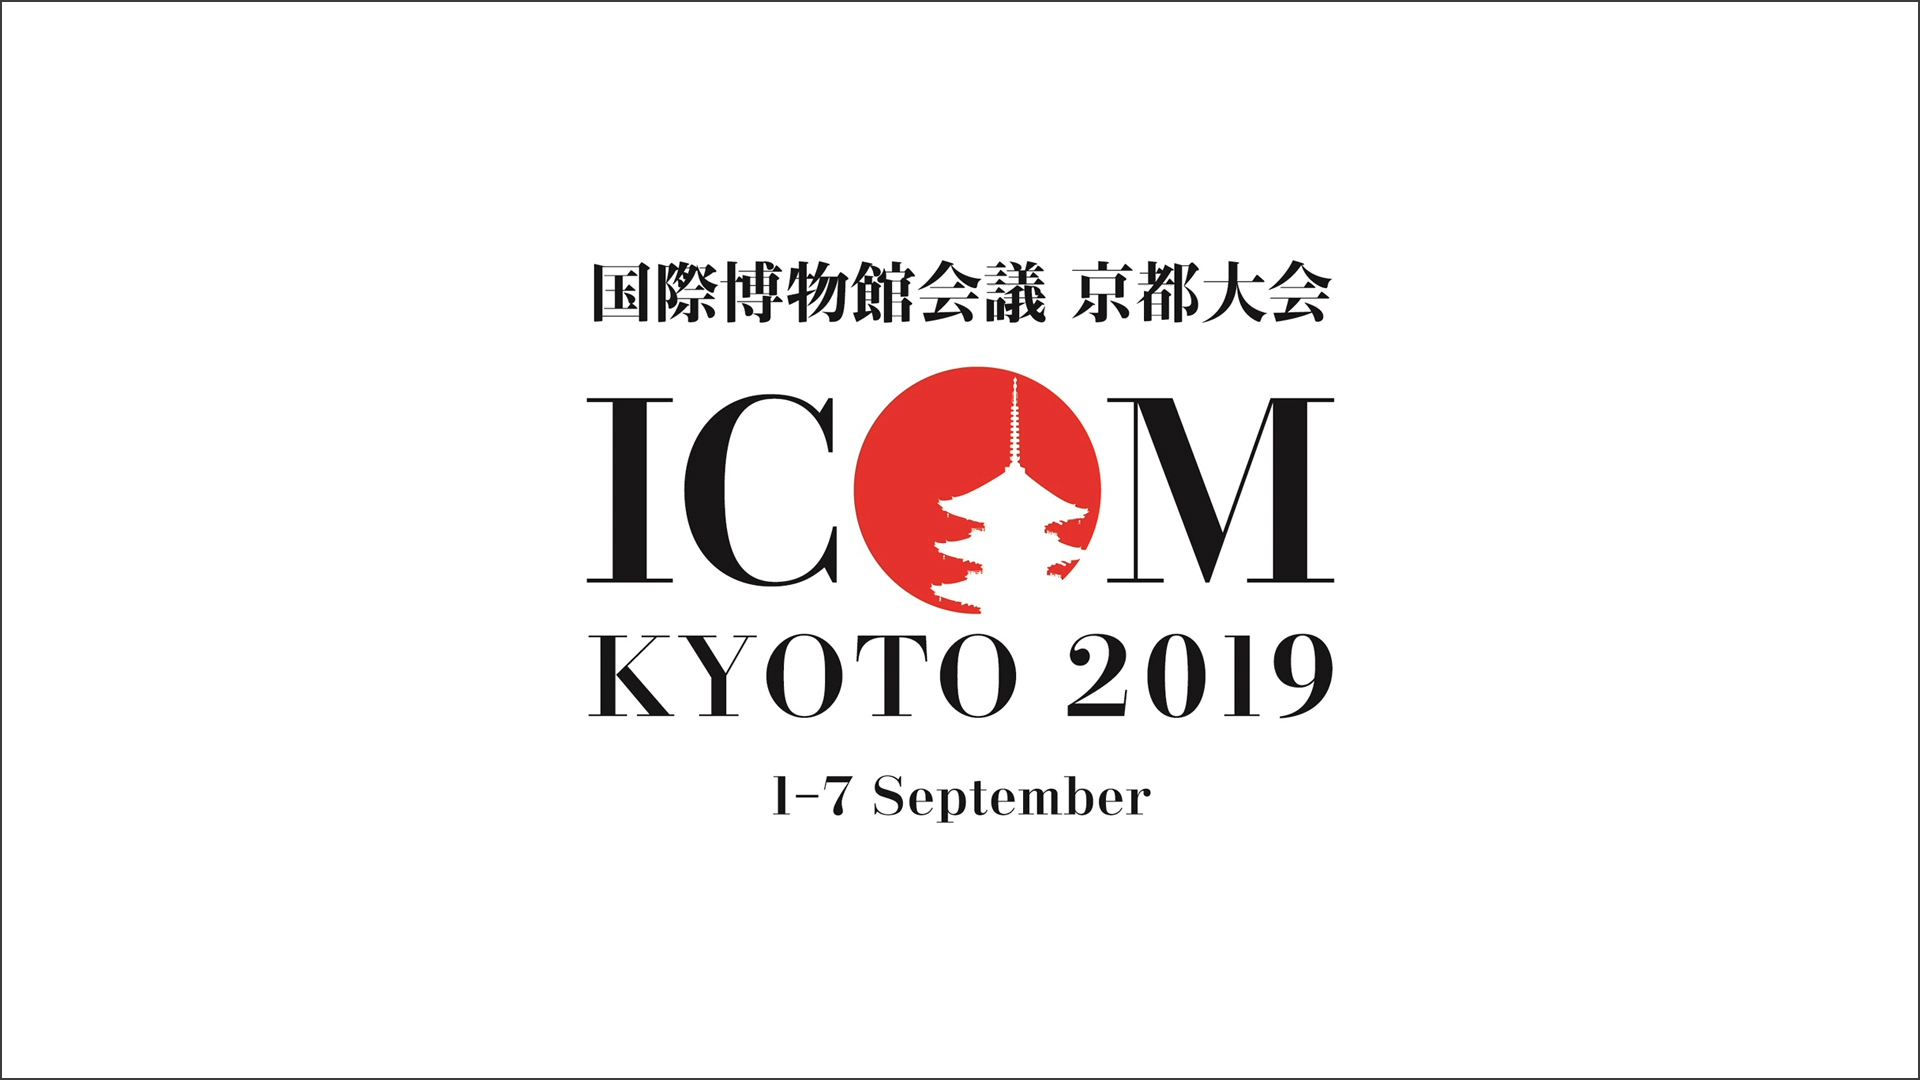 ICOM Kyoto 2019